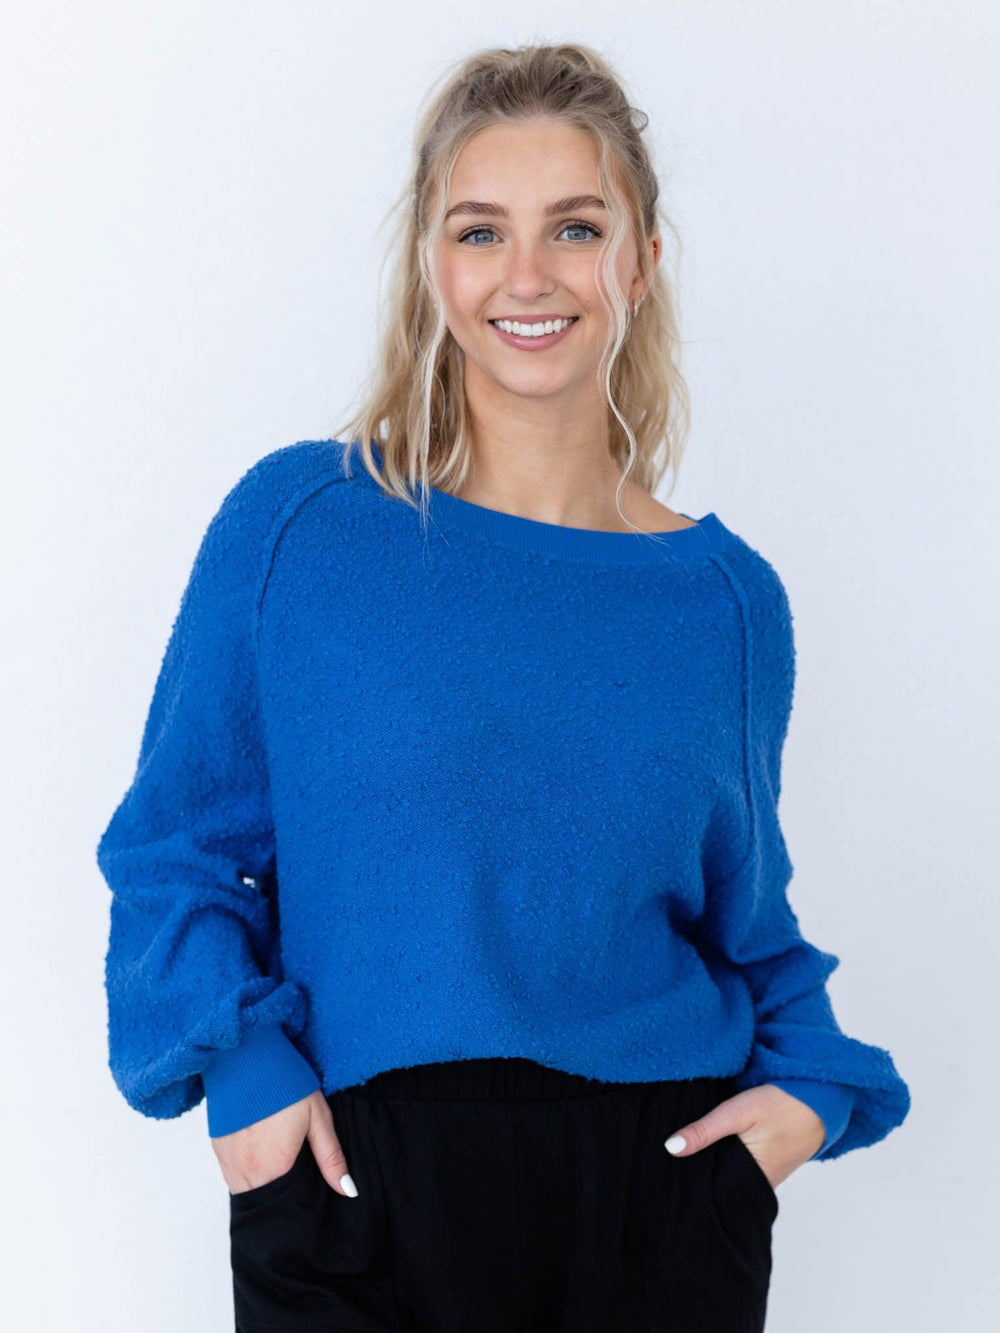 long sleeve sweater